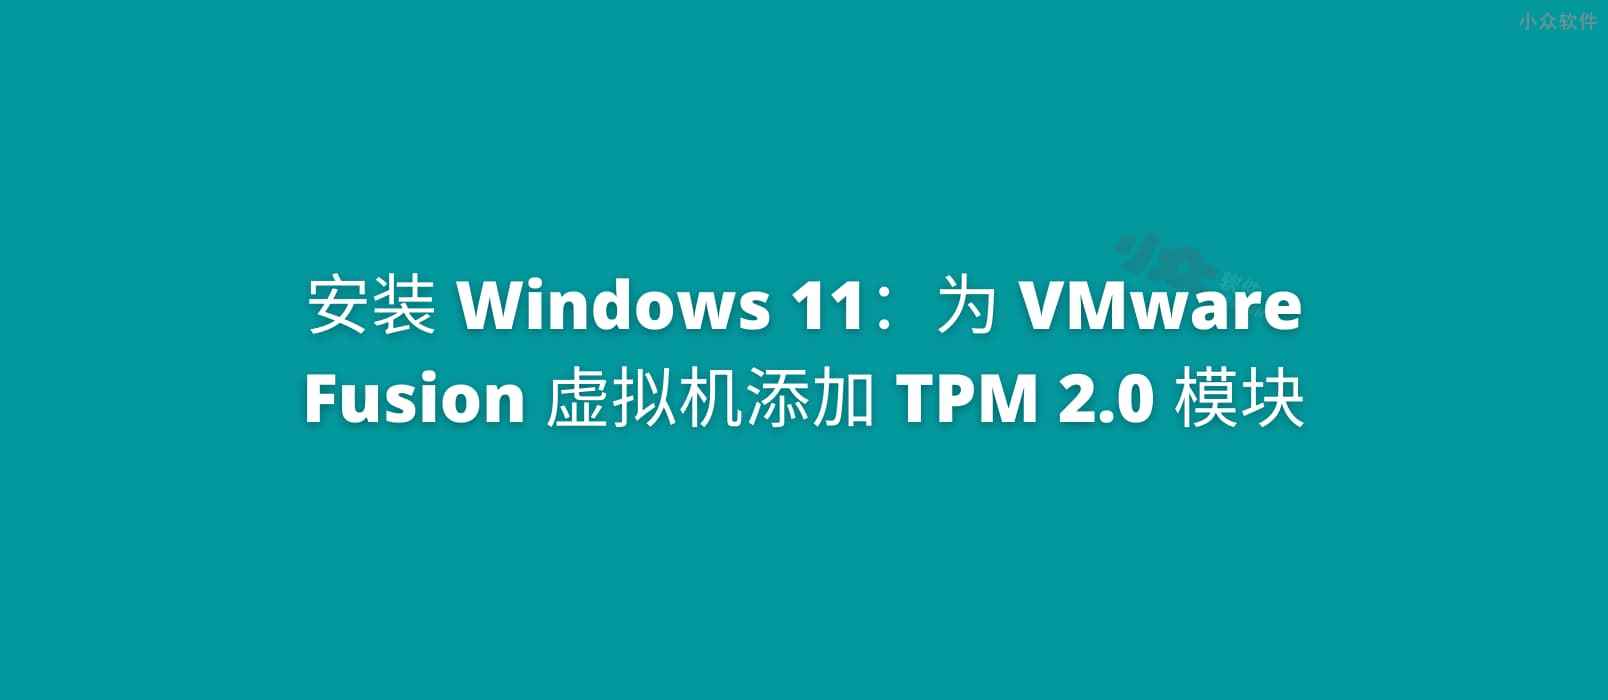 为 VMware Fusion 虚拟机添加 TPM 2.0 模块，安装 Windows 11